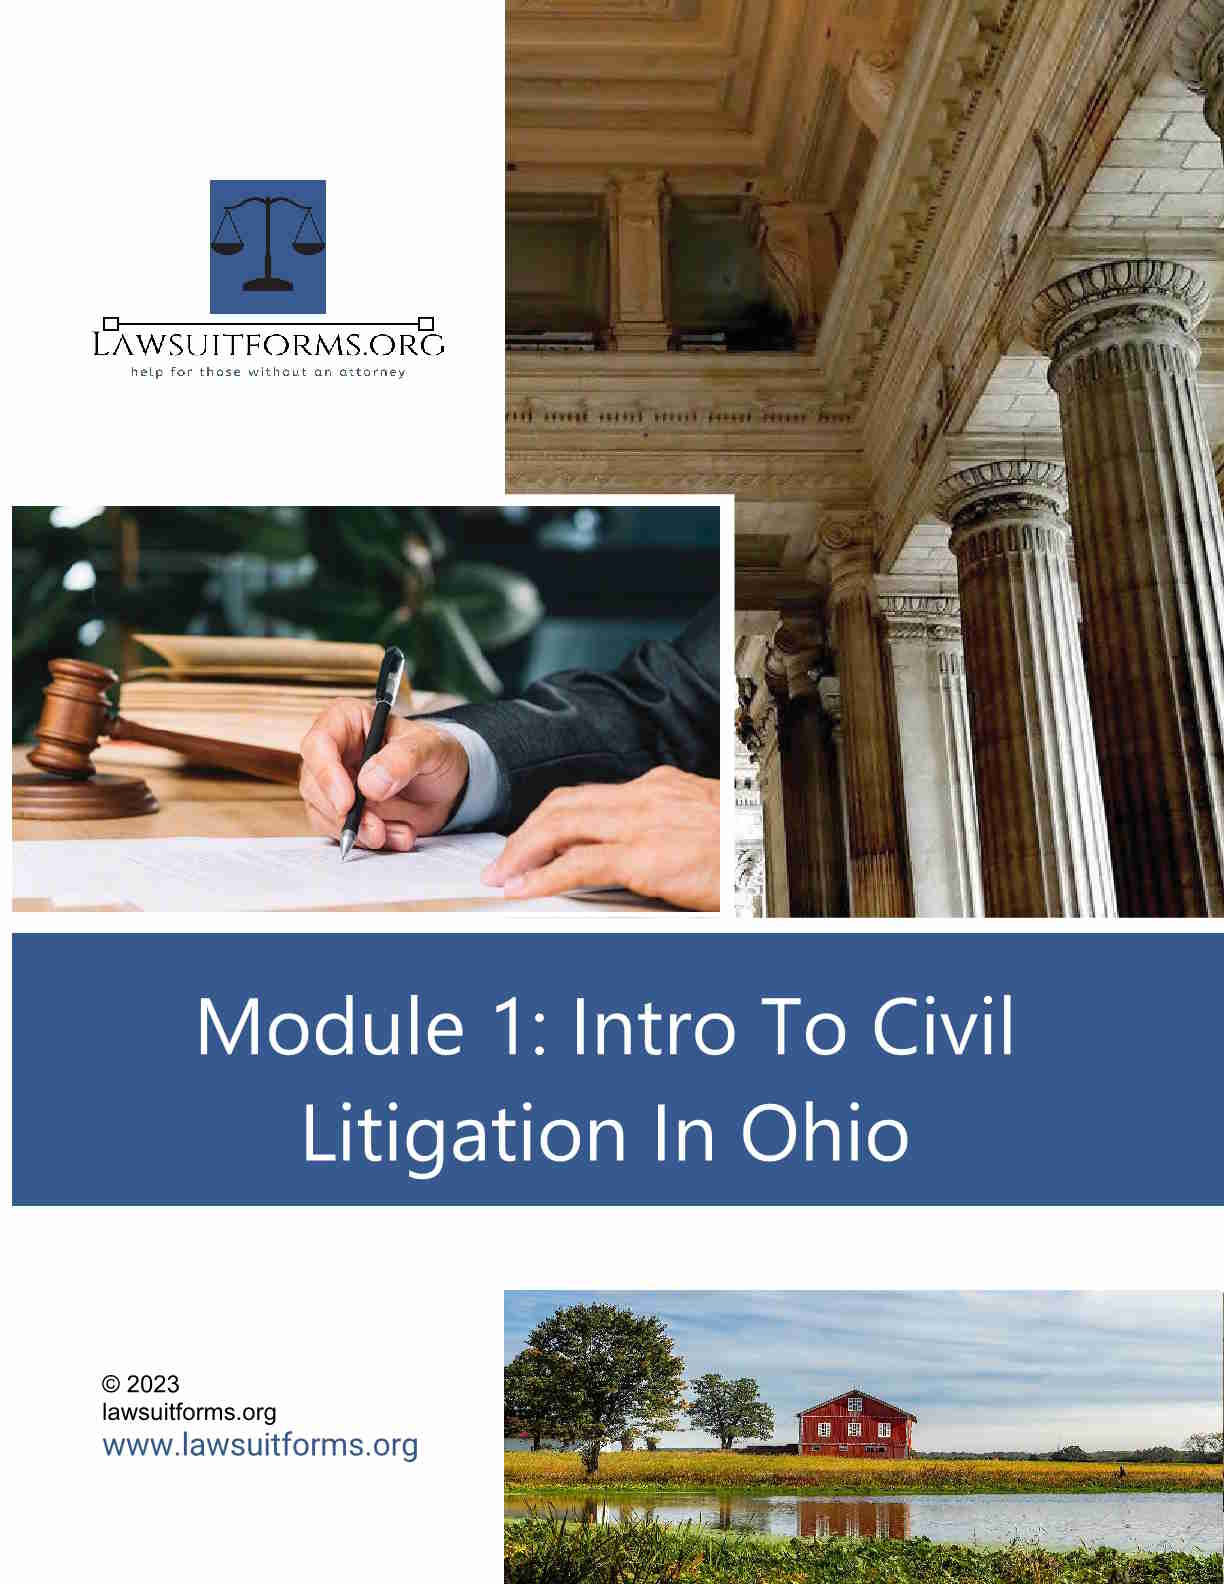 Ohio lawsuit forms